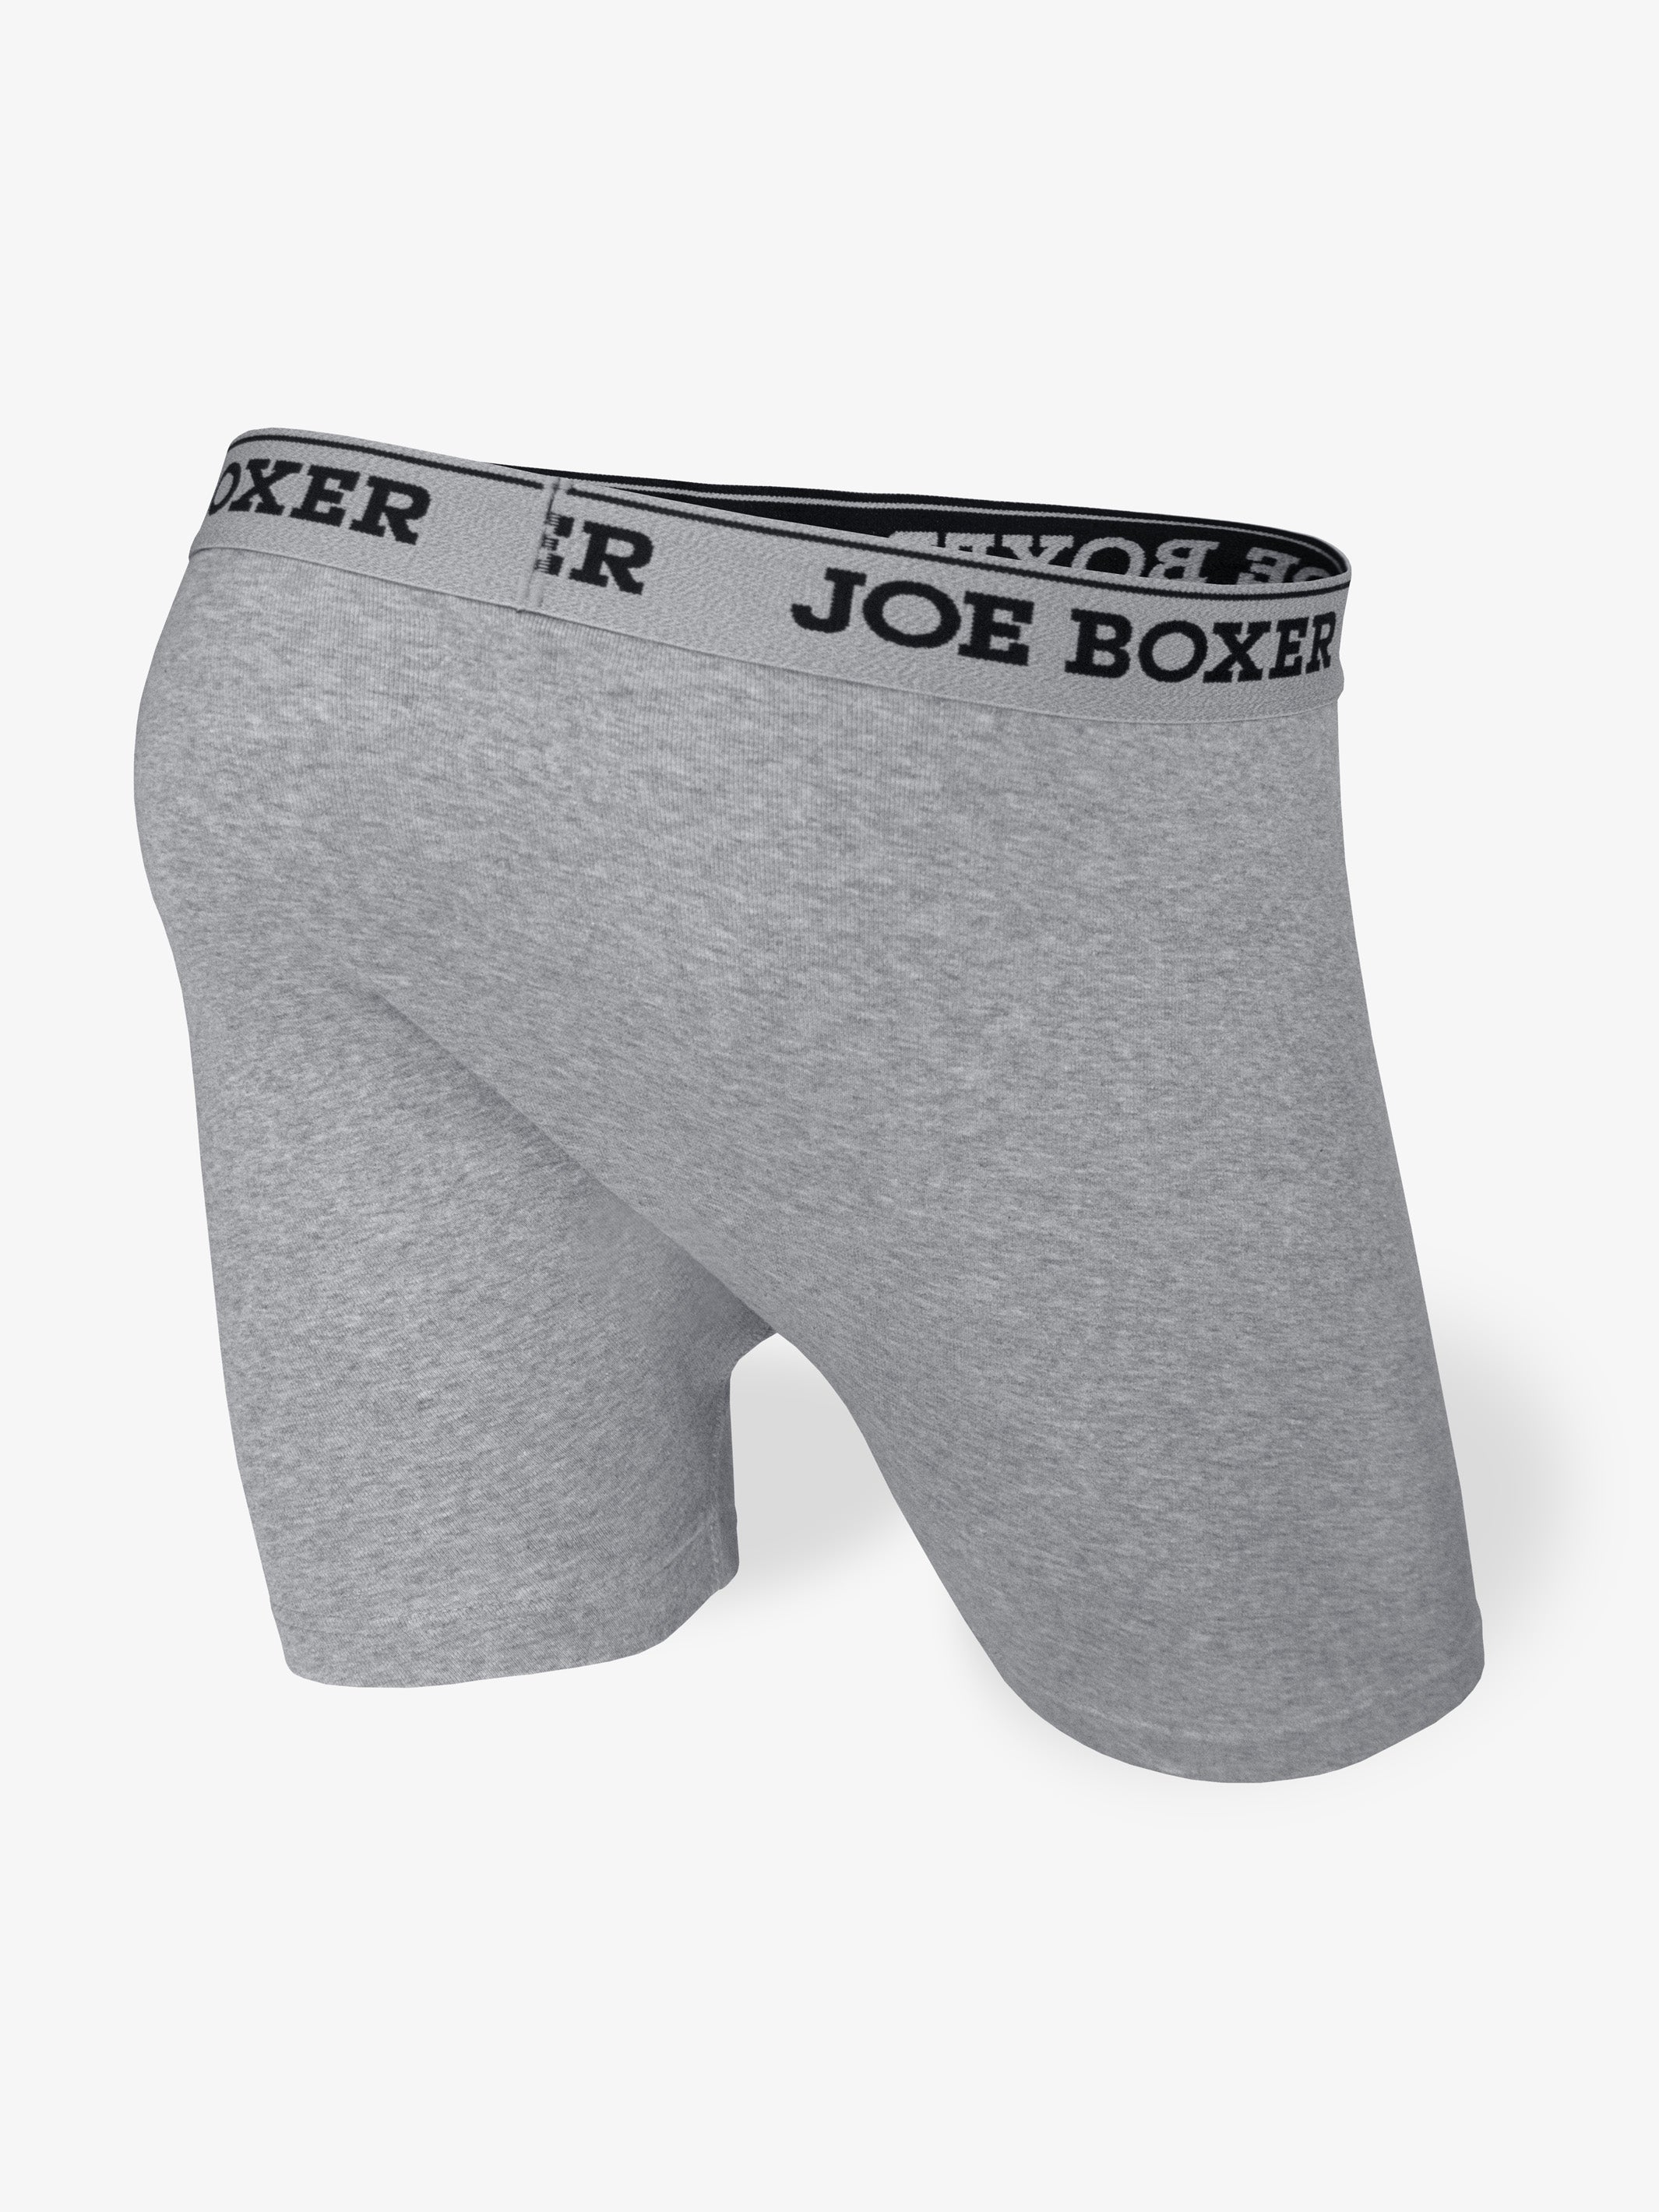 Joe Boxer Men's Cotton Grey Boxer Briefs XL, 4 units